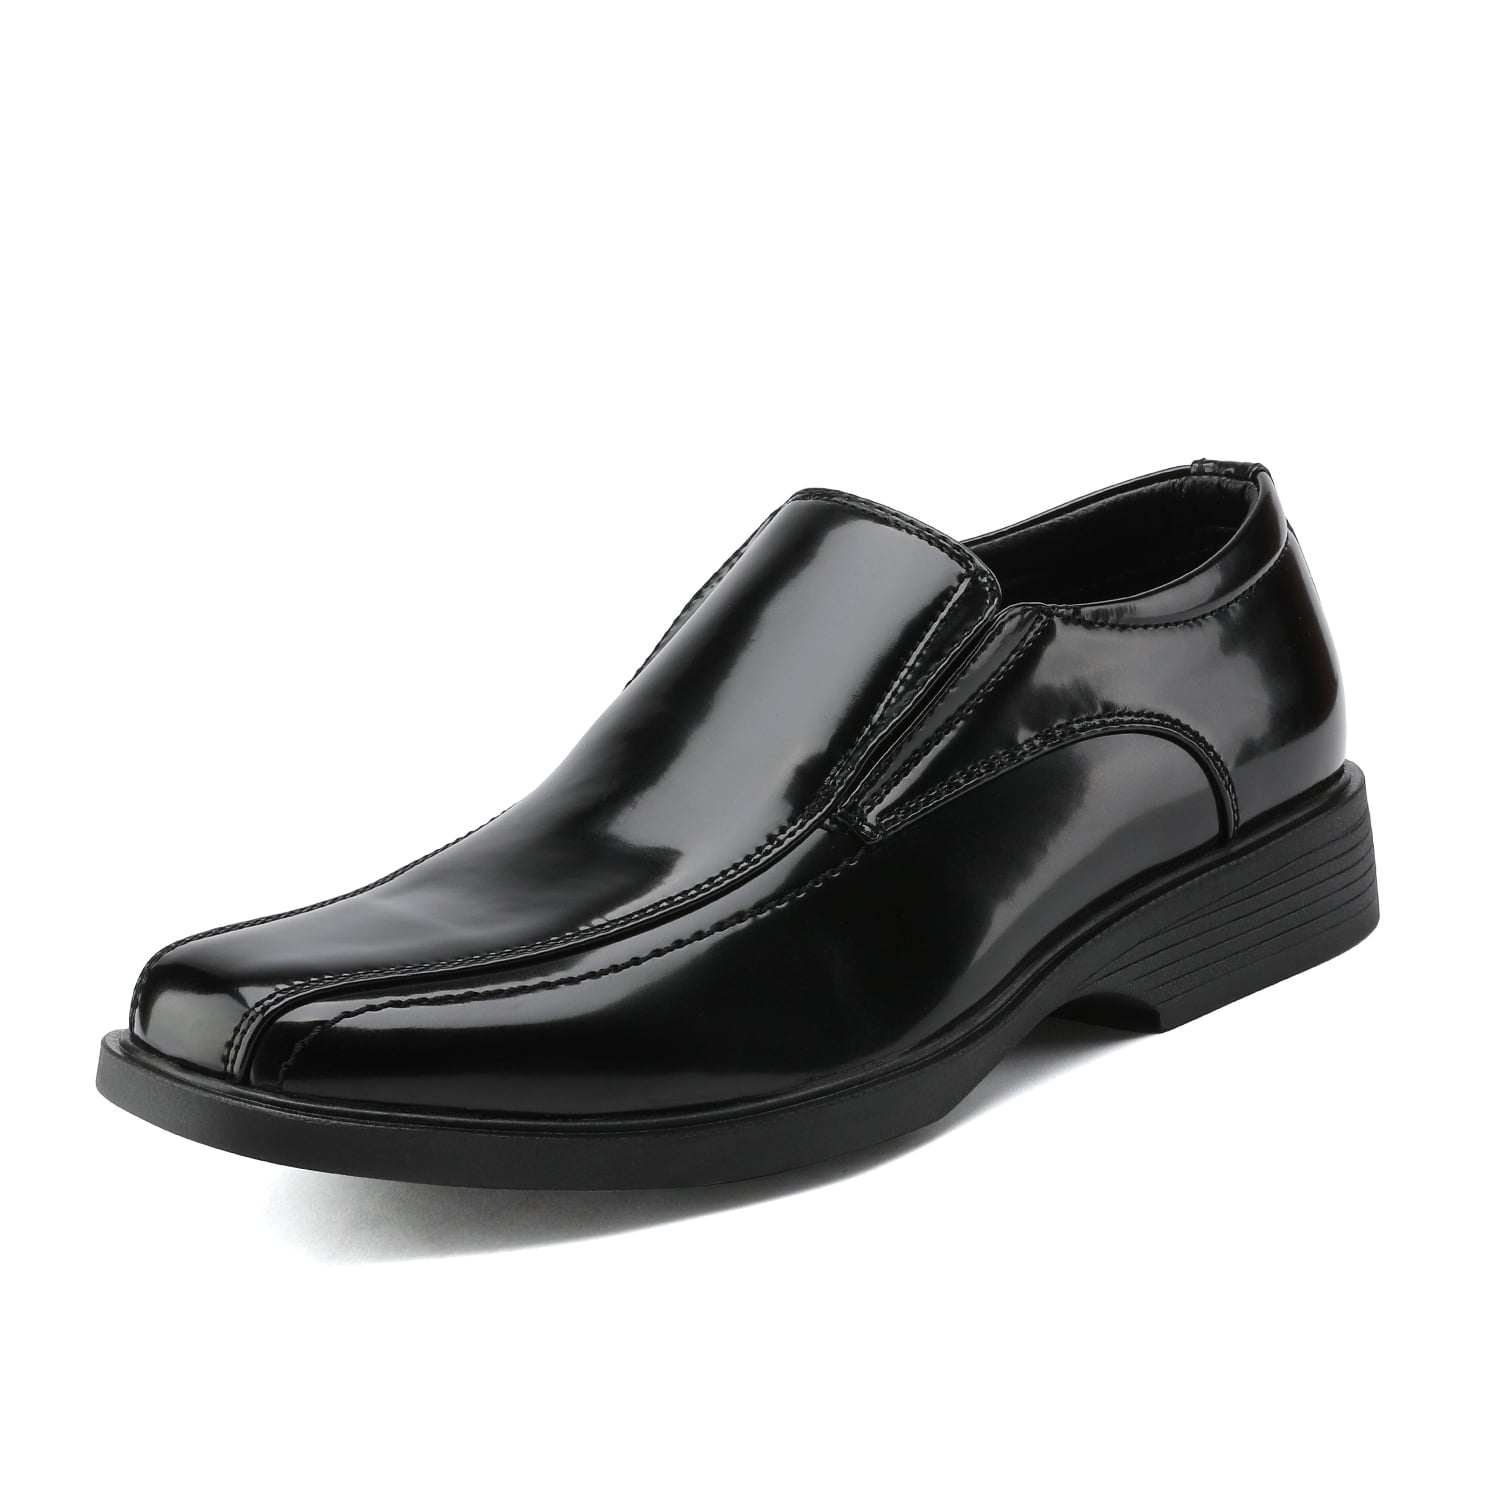 Bruno Marc Mens Cambridge-05 Black Leather Lined Dress Loafers Shoes Size 10 US/ 9 UK 